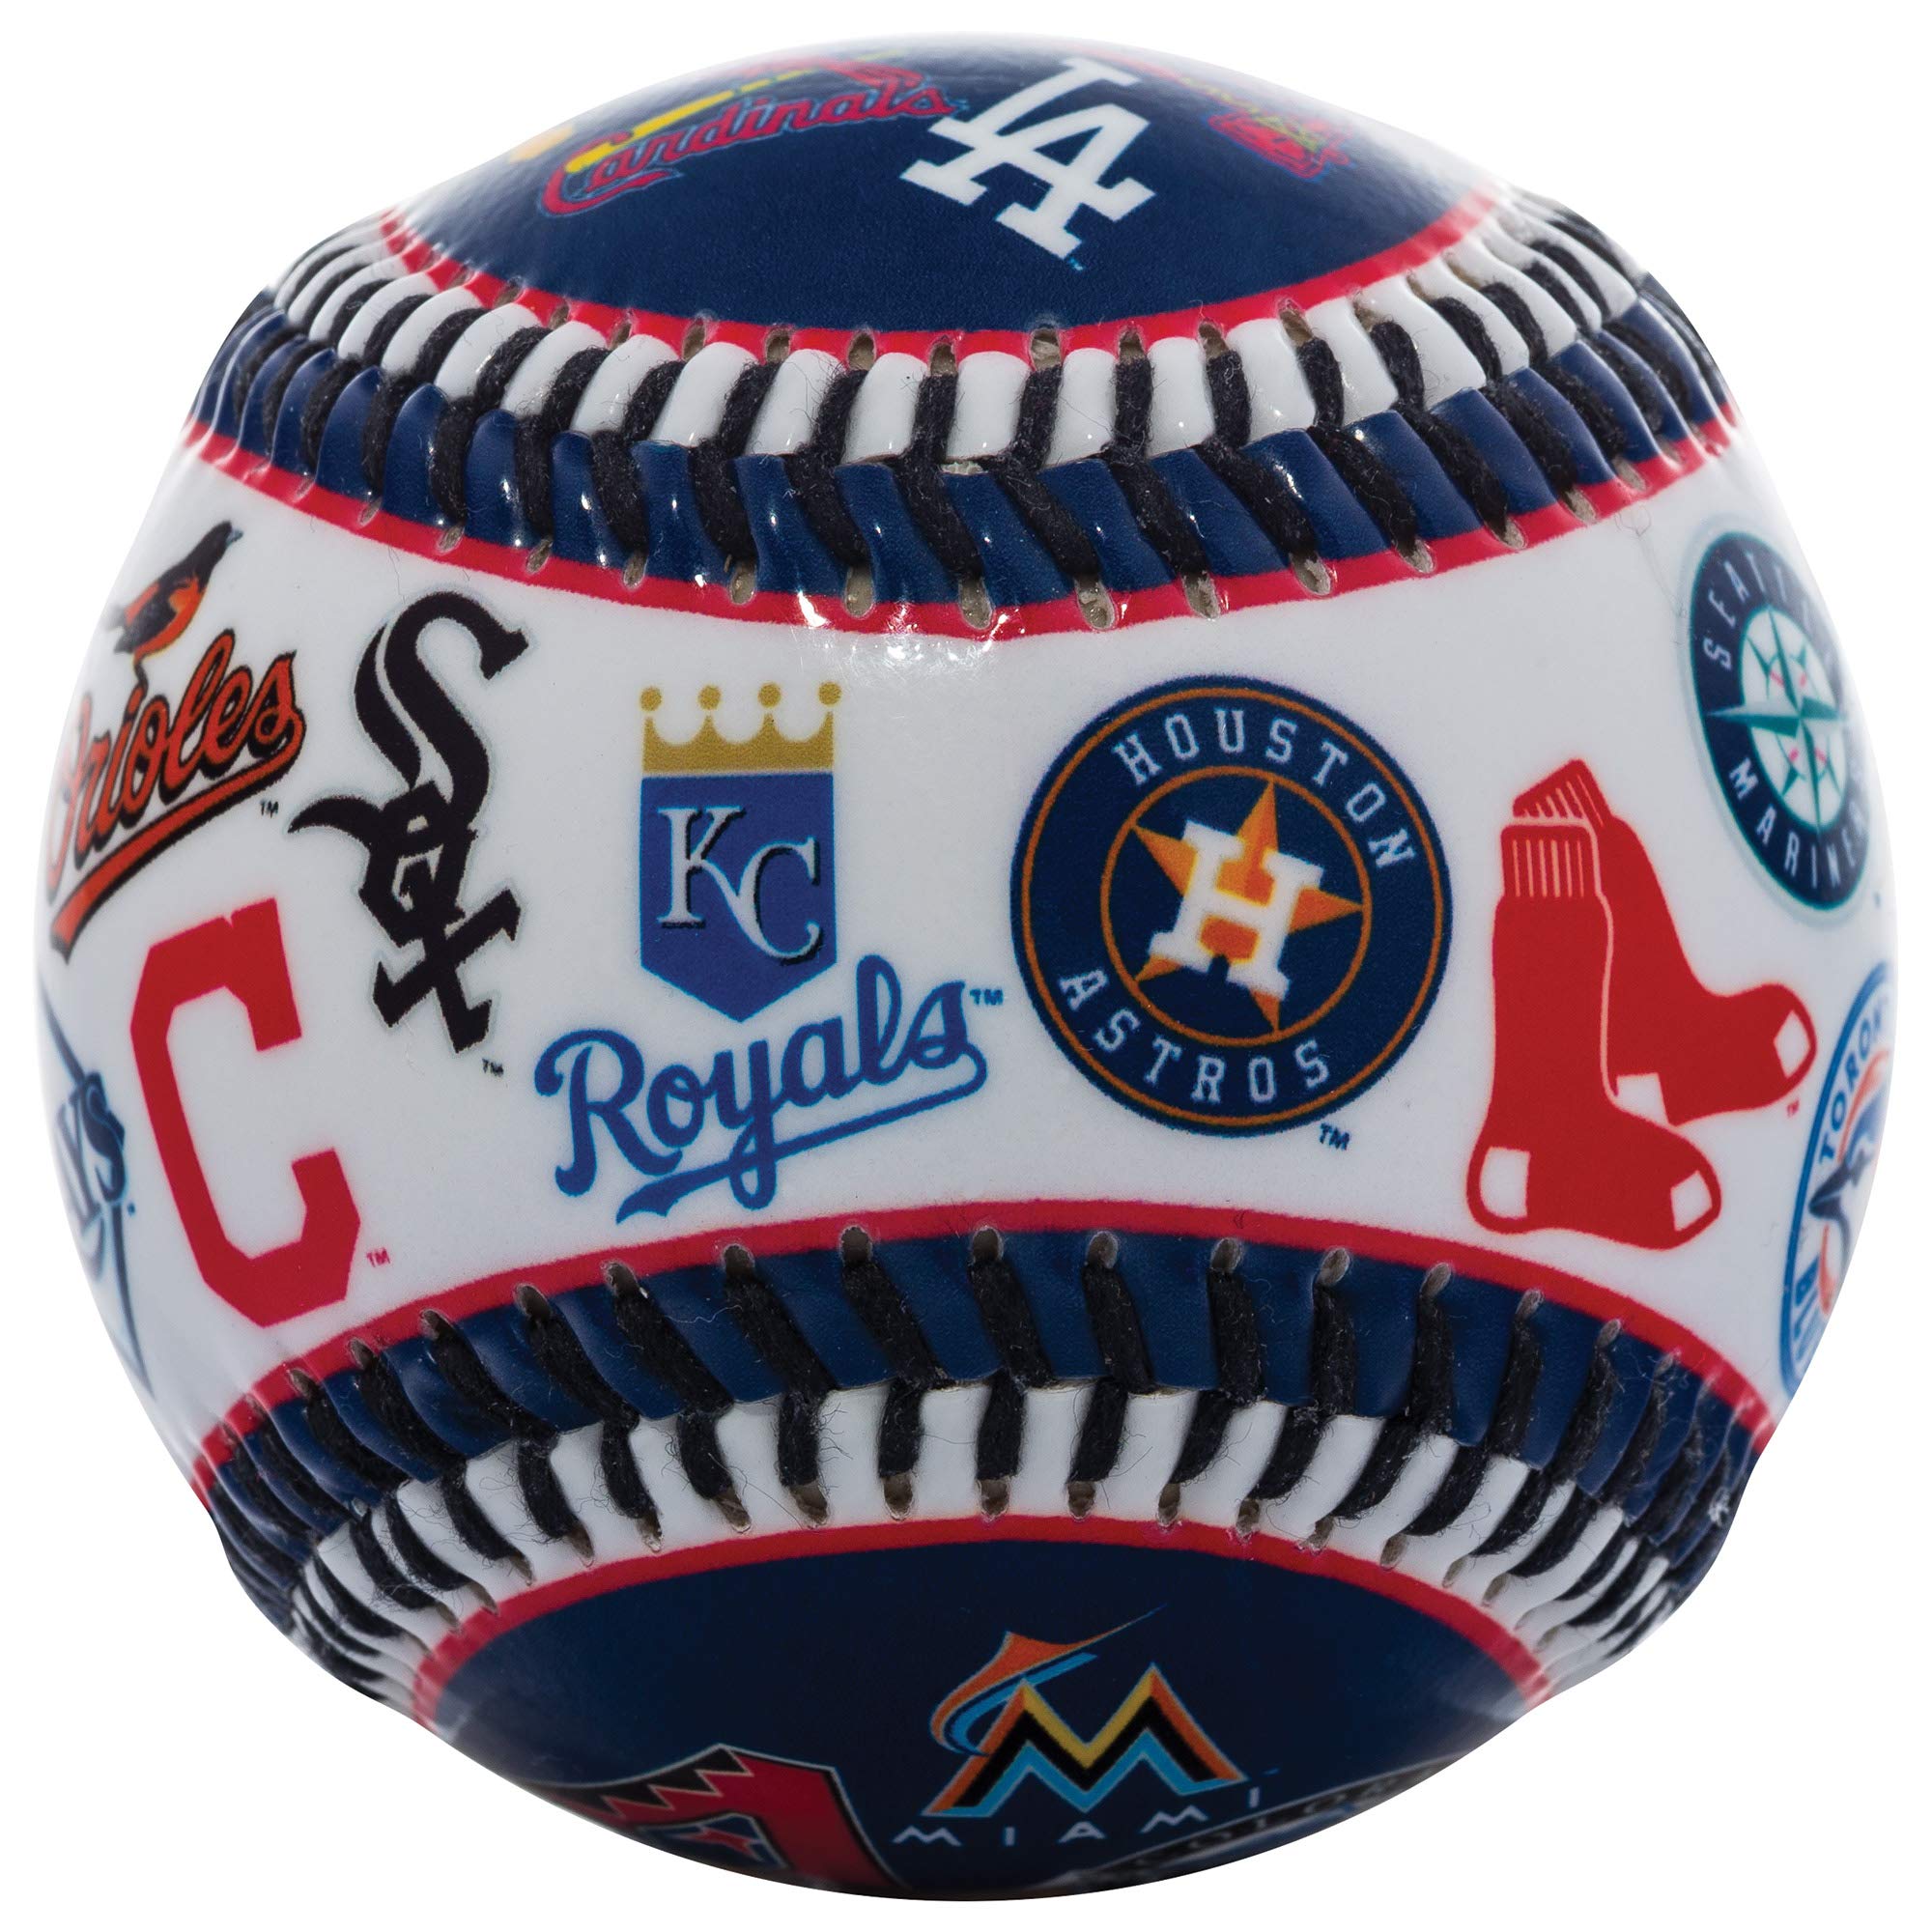 30 Famous Baseball Logos in the MLB  BrandCrowd blog